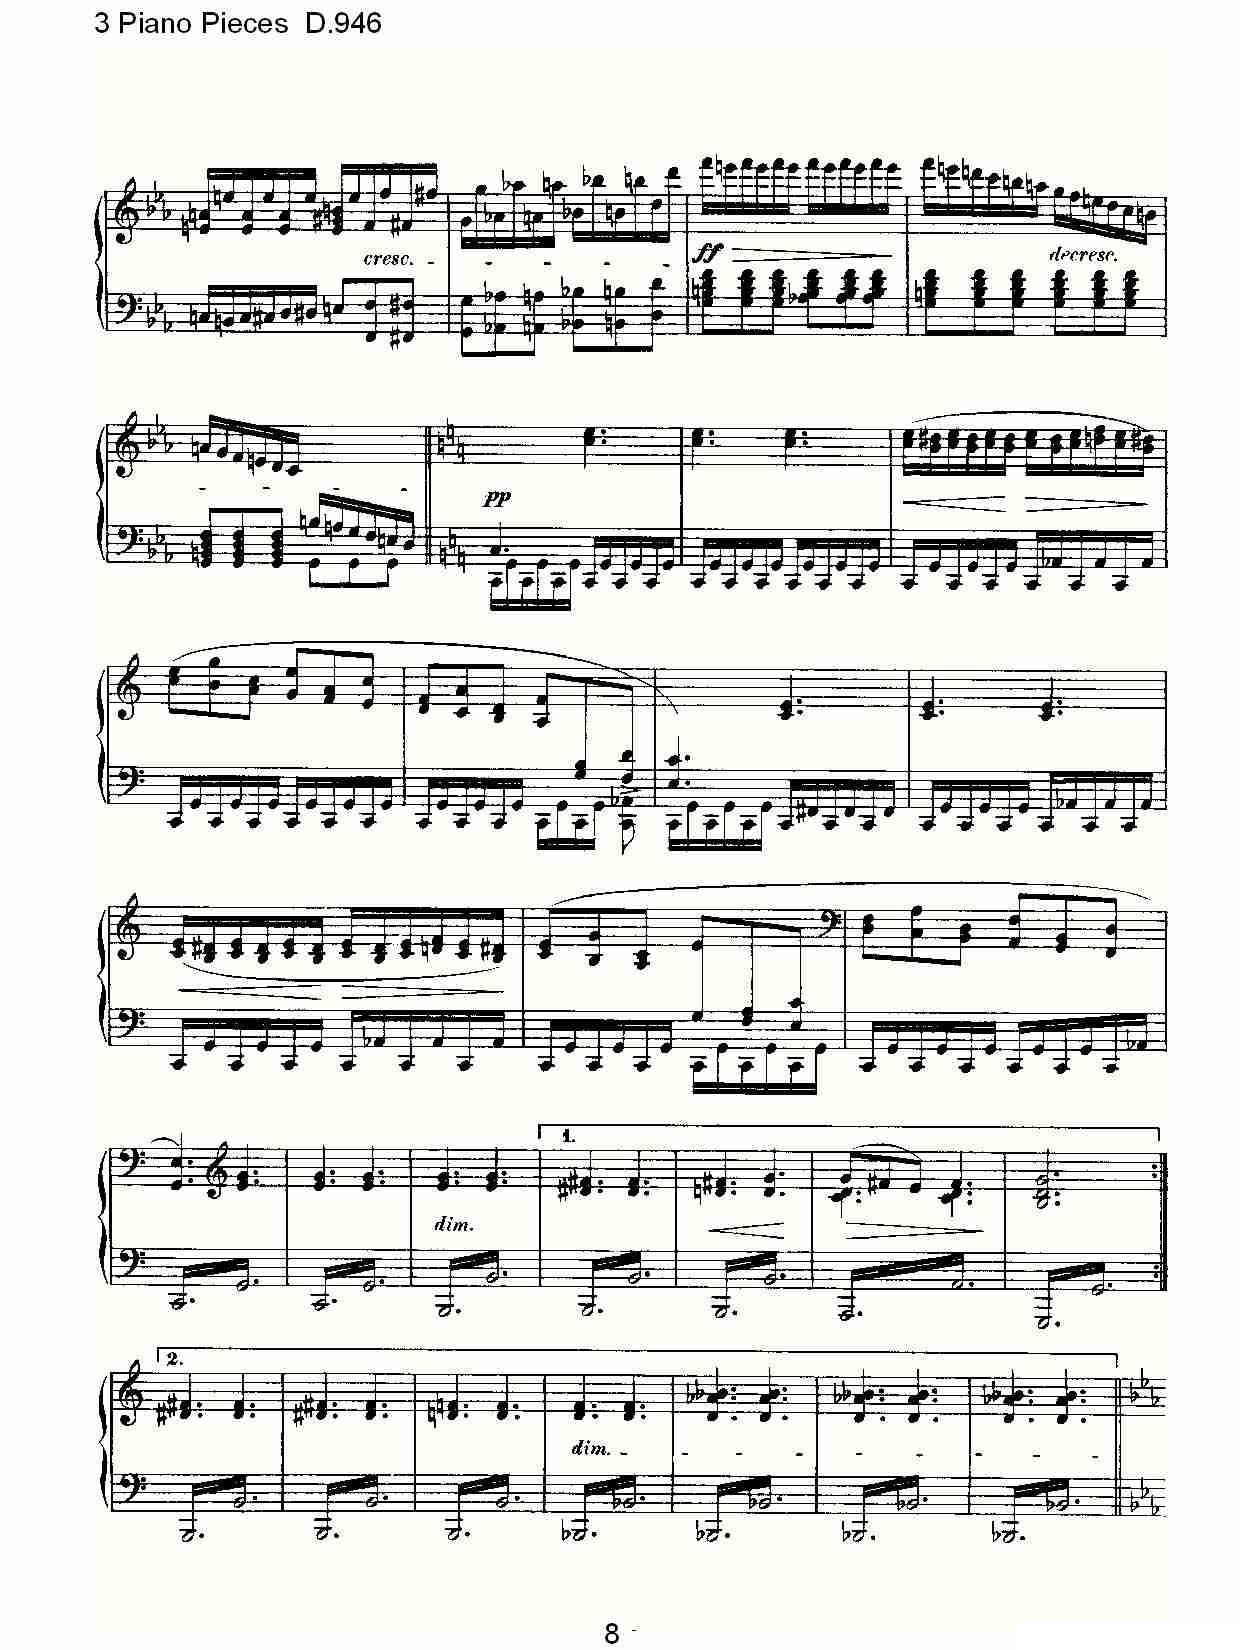 3 Piano Pieces D.946（钢琴三联奏D.946）钢琴曲谱（图8）